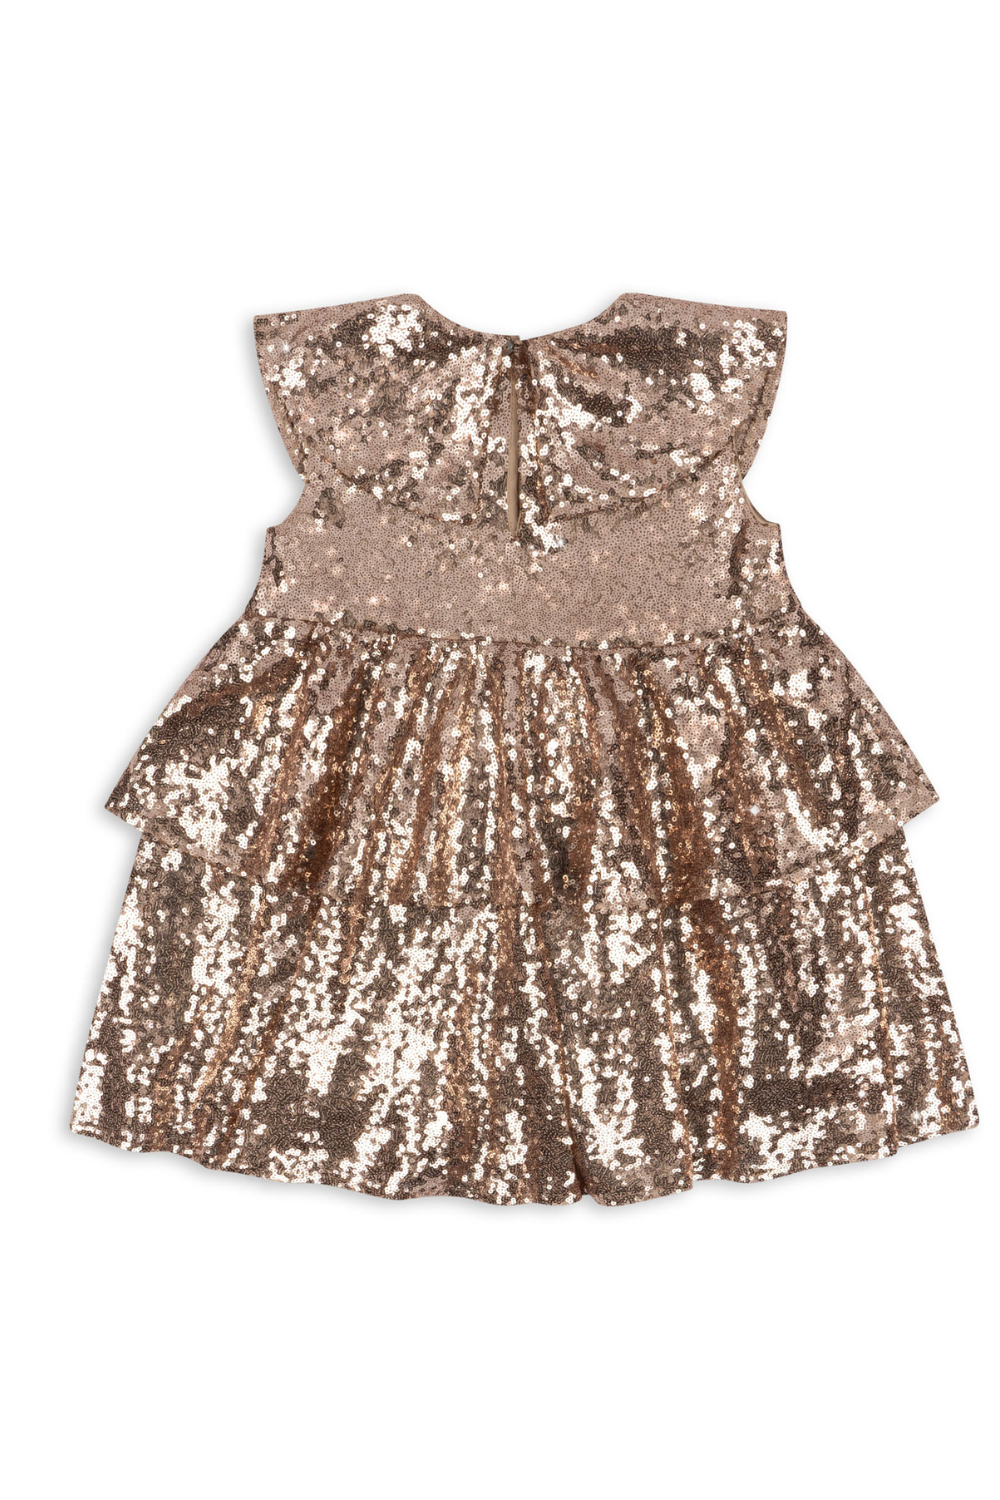 Starla Sequin Dress - Gold Blush: Shimmering Special Occasion Attire